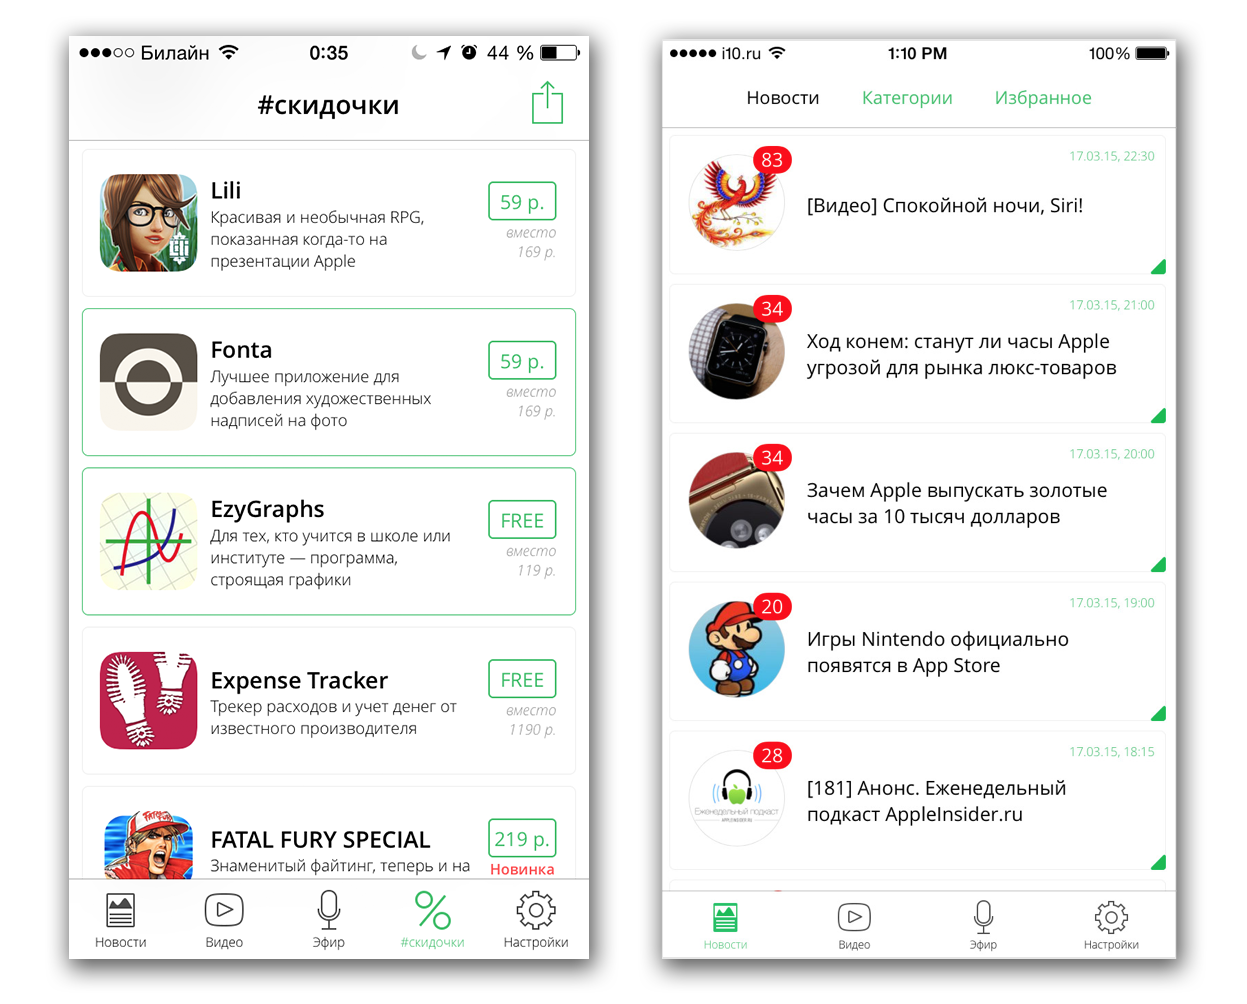 AppleInsider.ru: Apple App Store цензурирует российские тематические СМИ - 2